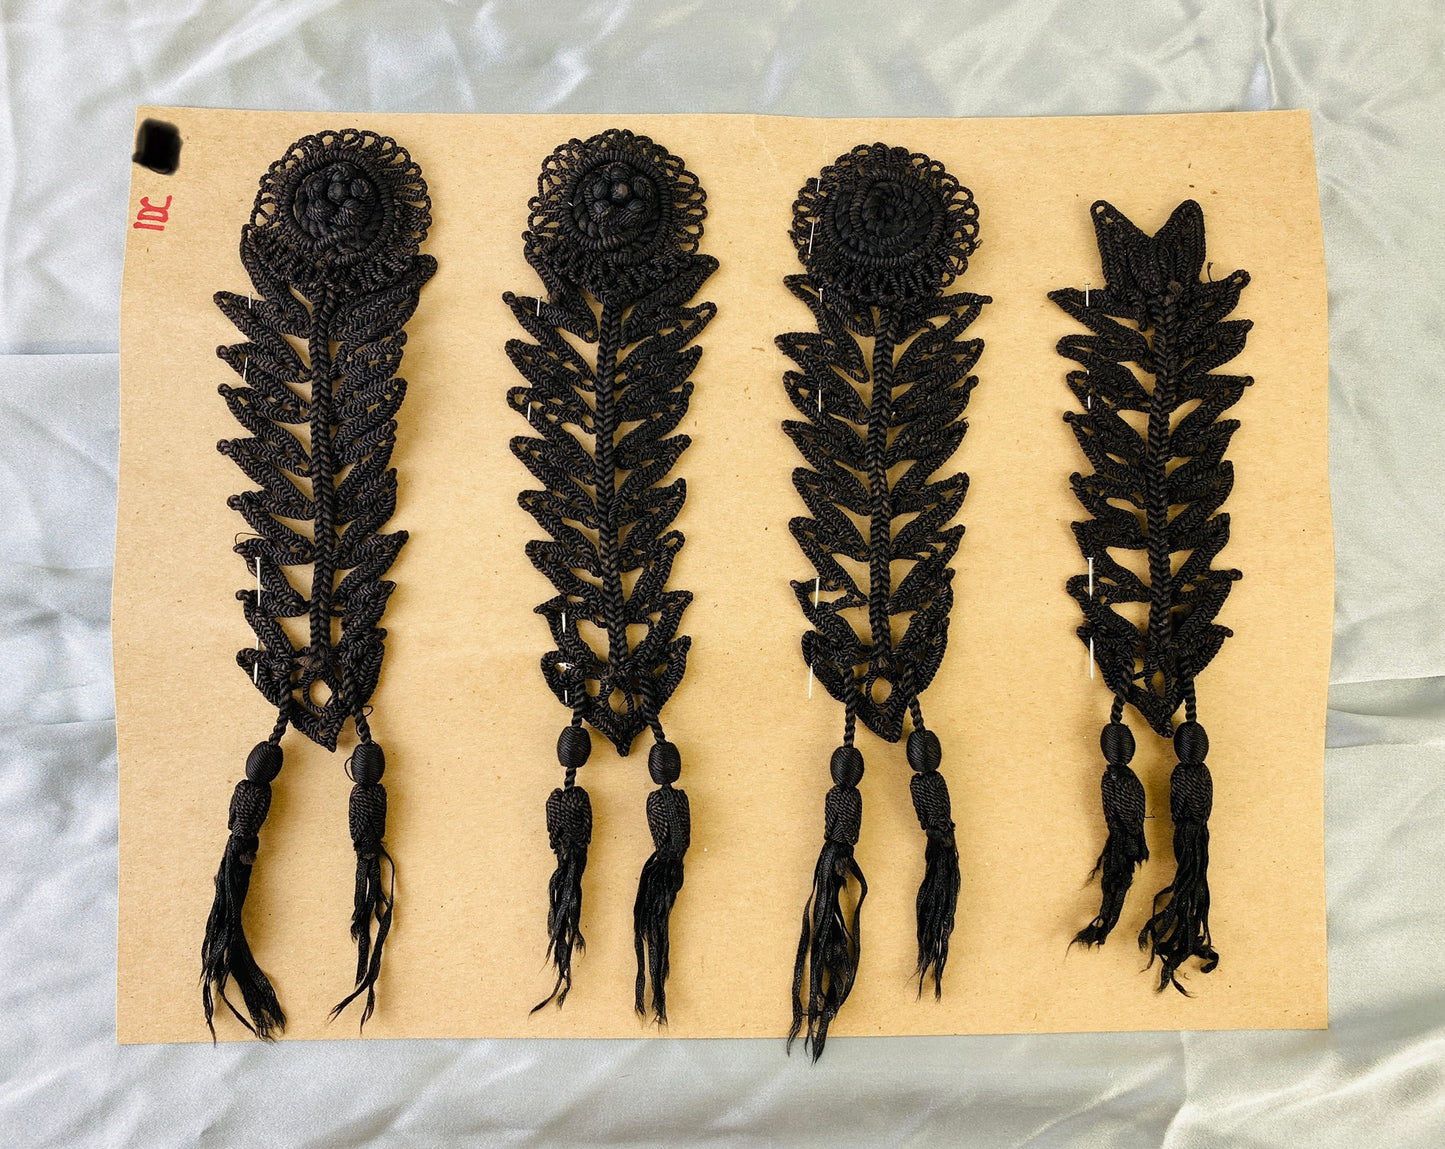 Antique Victorian Black Floral Cord Appliqués, 4 Pieces